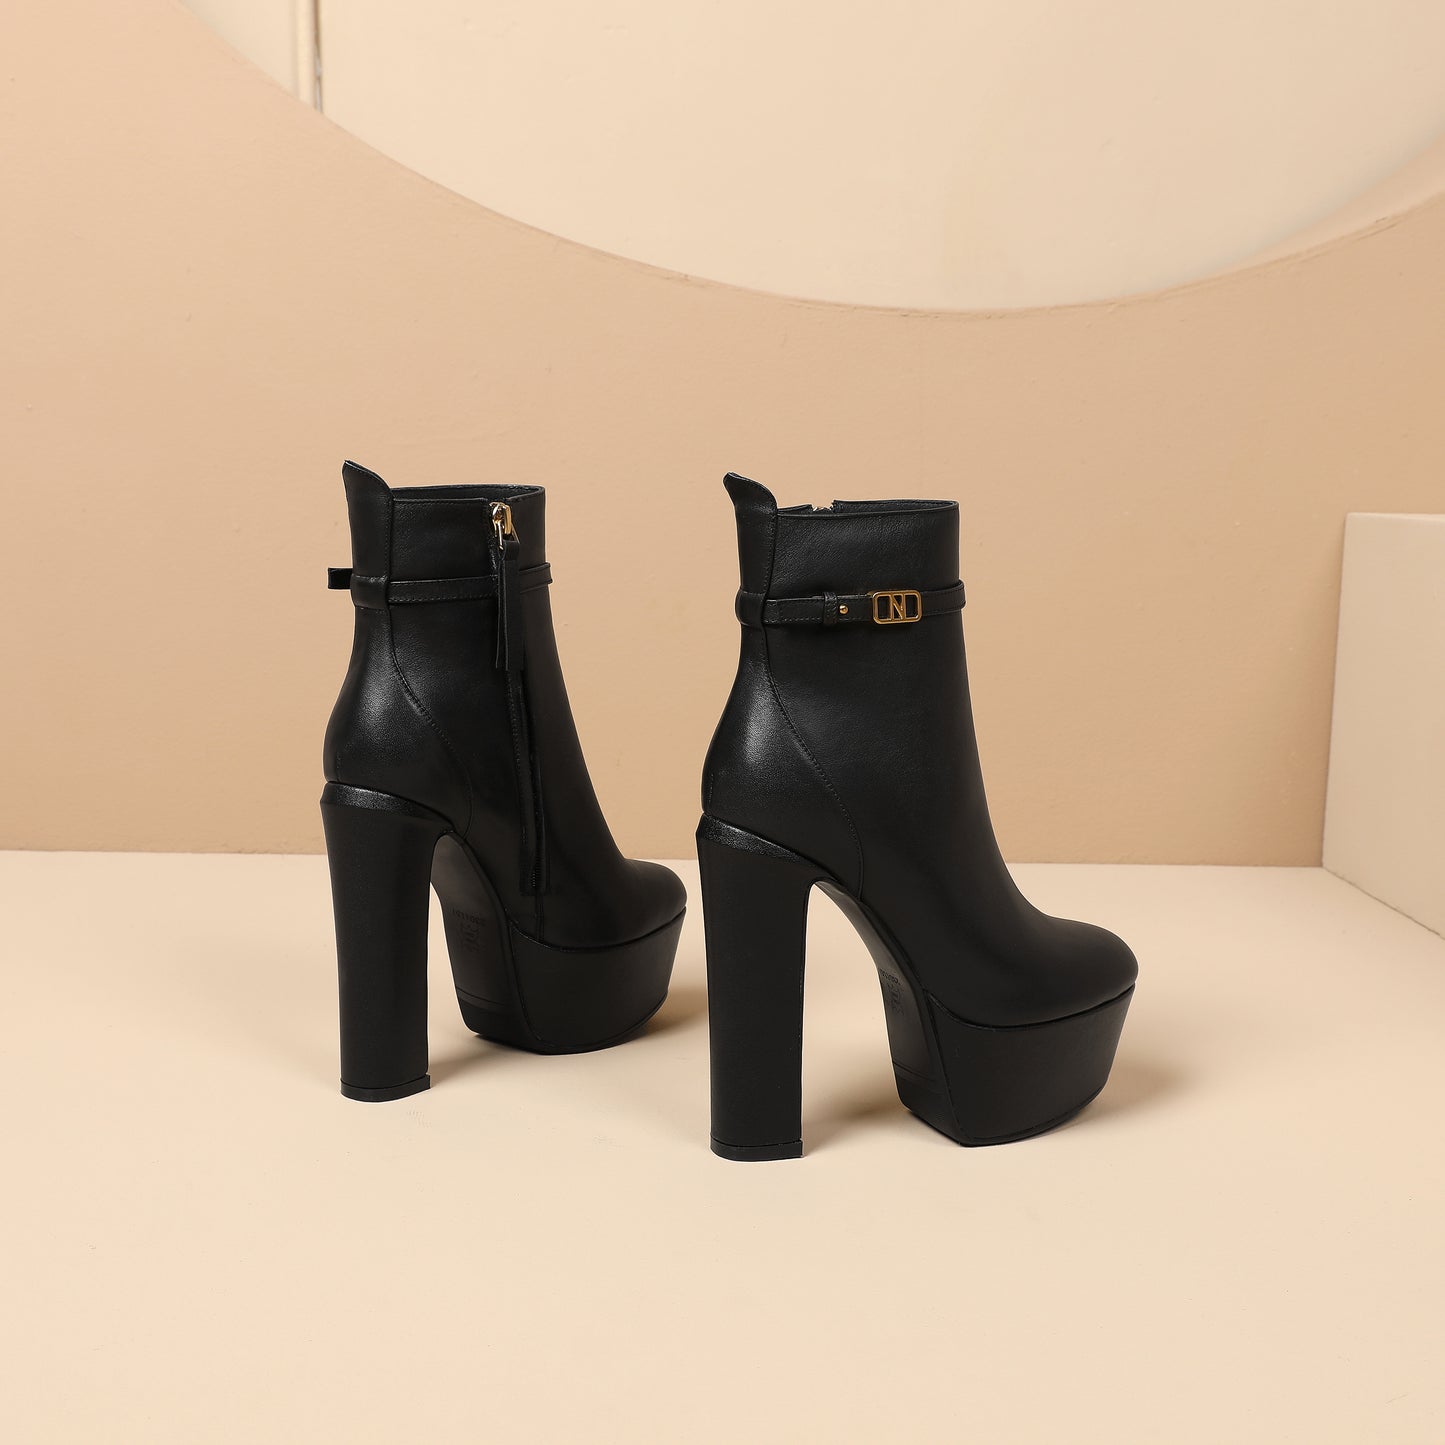 TinaCus Handmade Women's Genuine Leather Fashion Side Zipper Pointed Toe High Heel Sexy Platform Boots